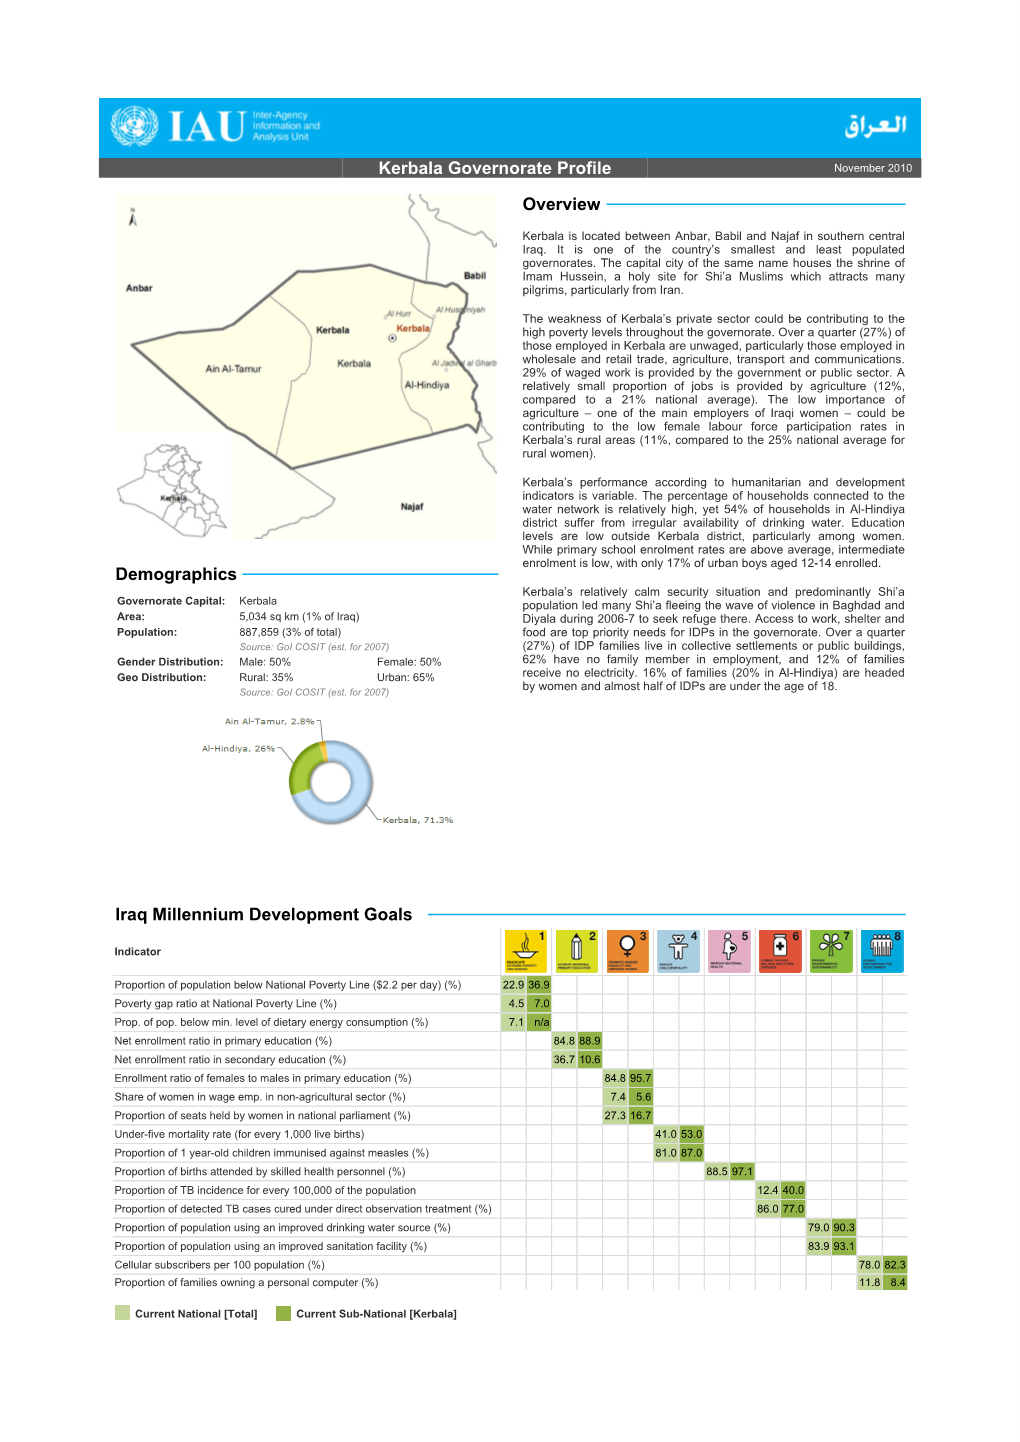 Kerbala Governorate Profile Overview Demographics Iraq Millennium